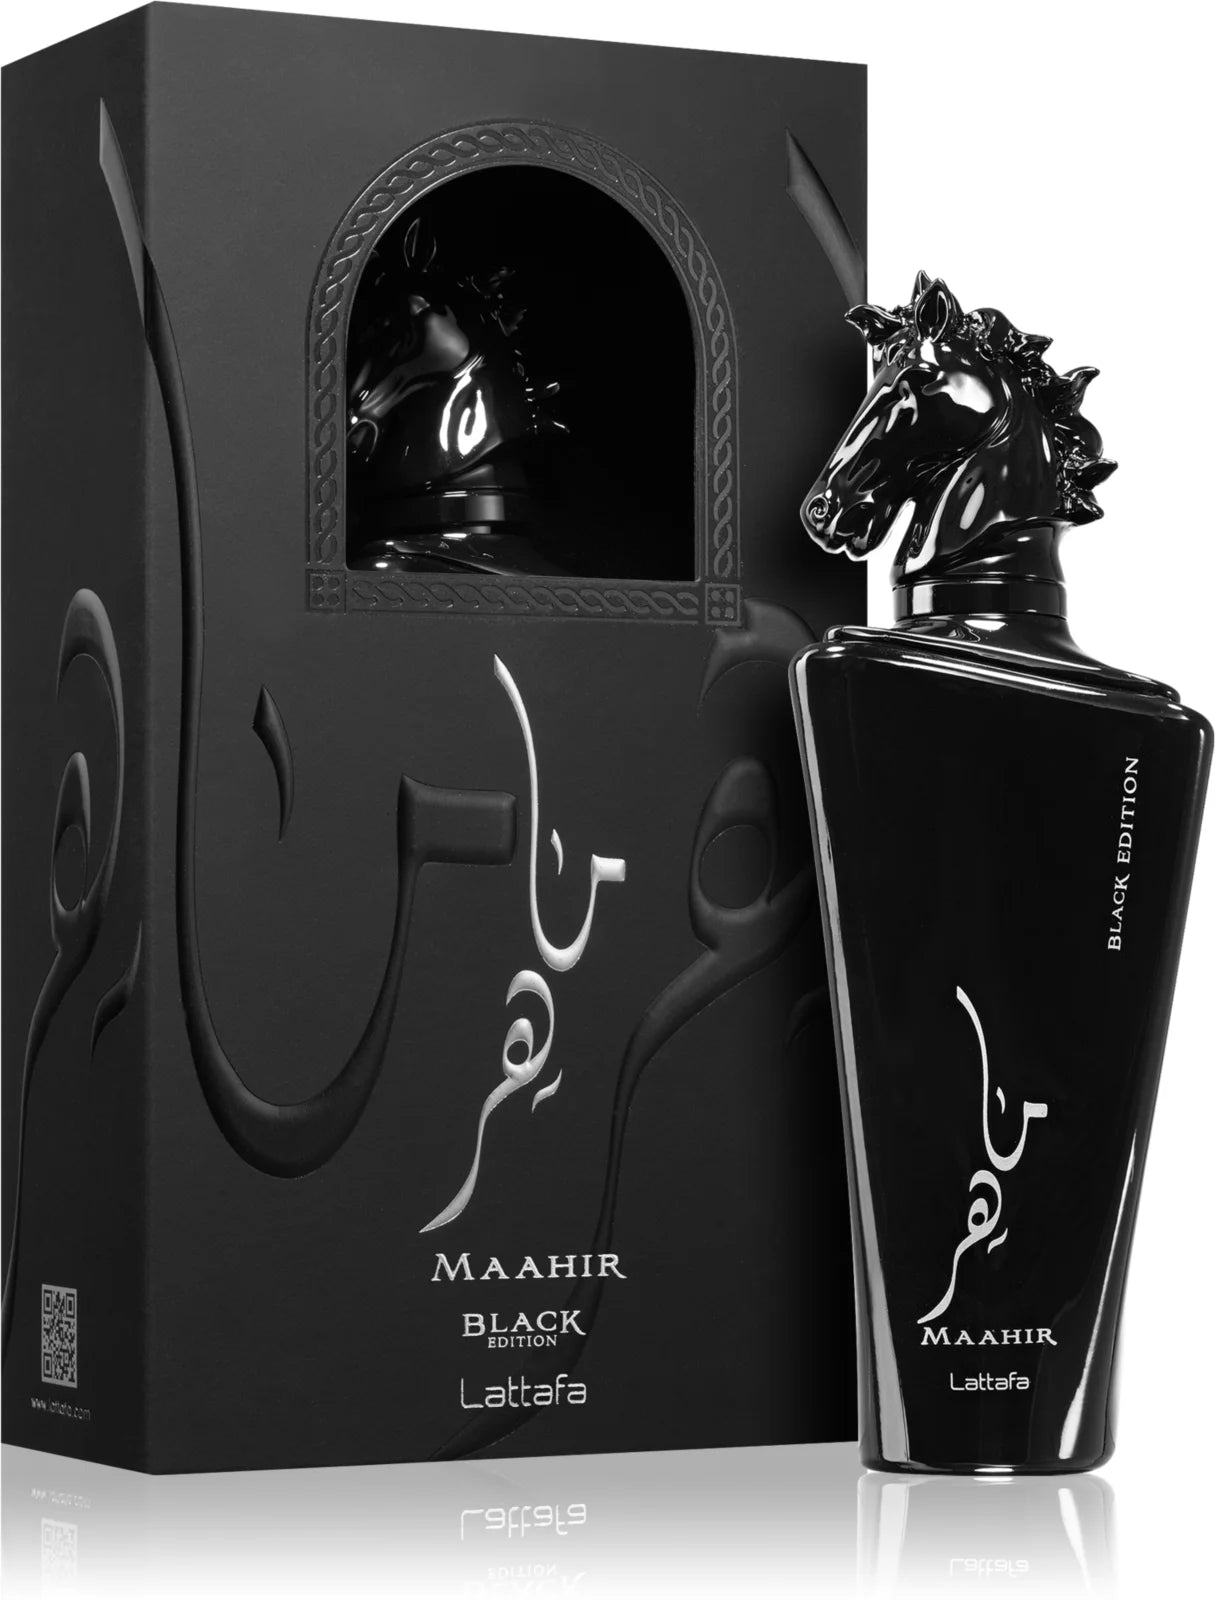 Maahir Black Edition - Lattafa - Eau de Parfum 100ML - Unisex - Inspired by ORTO PARISI